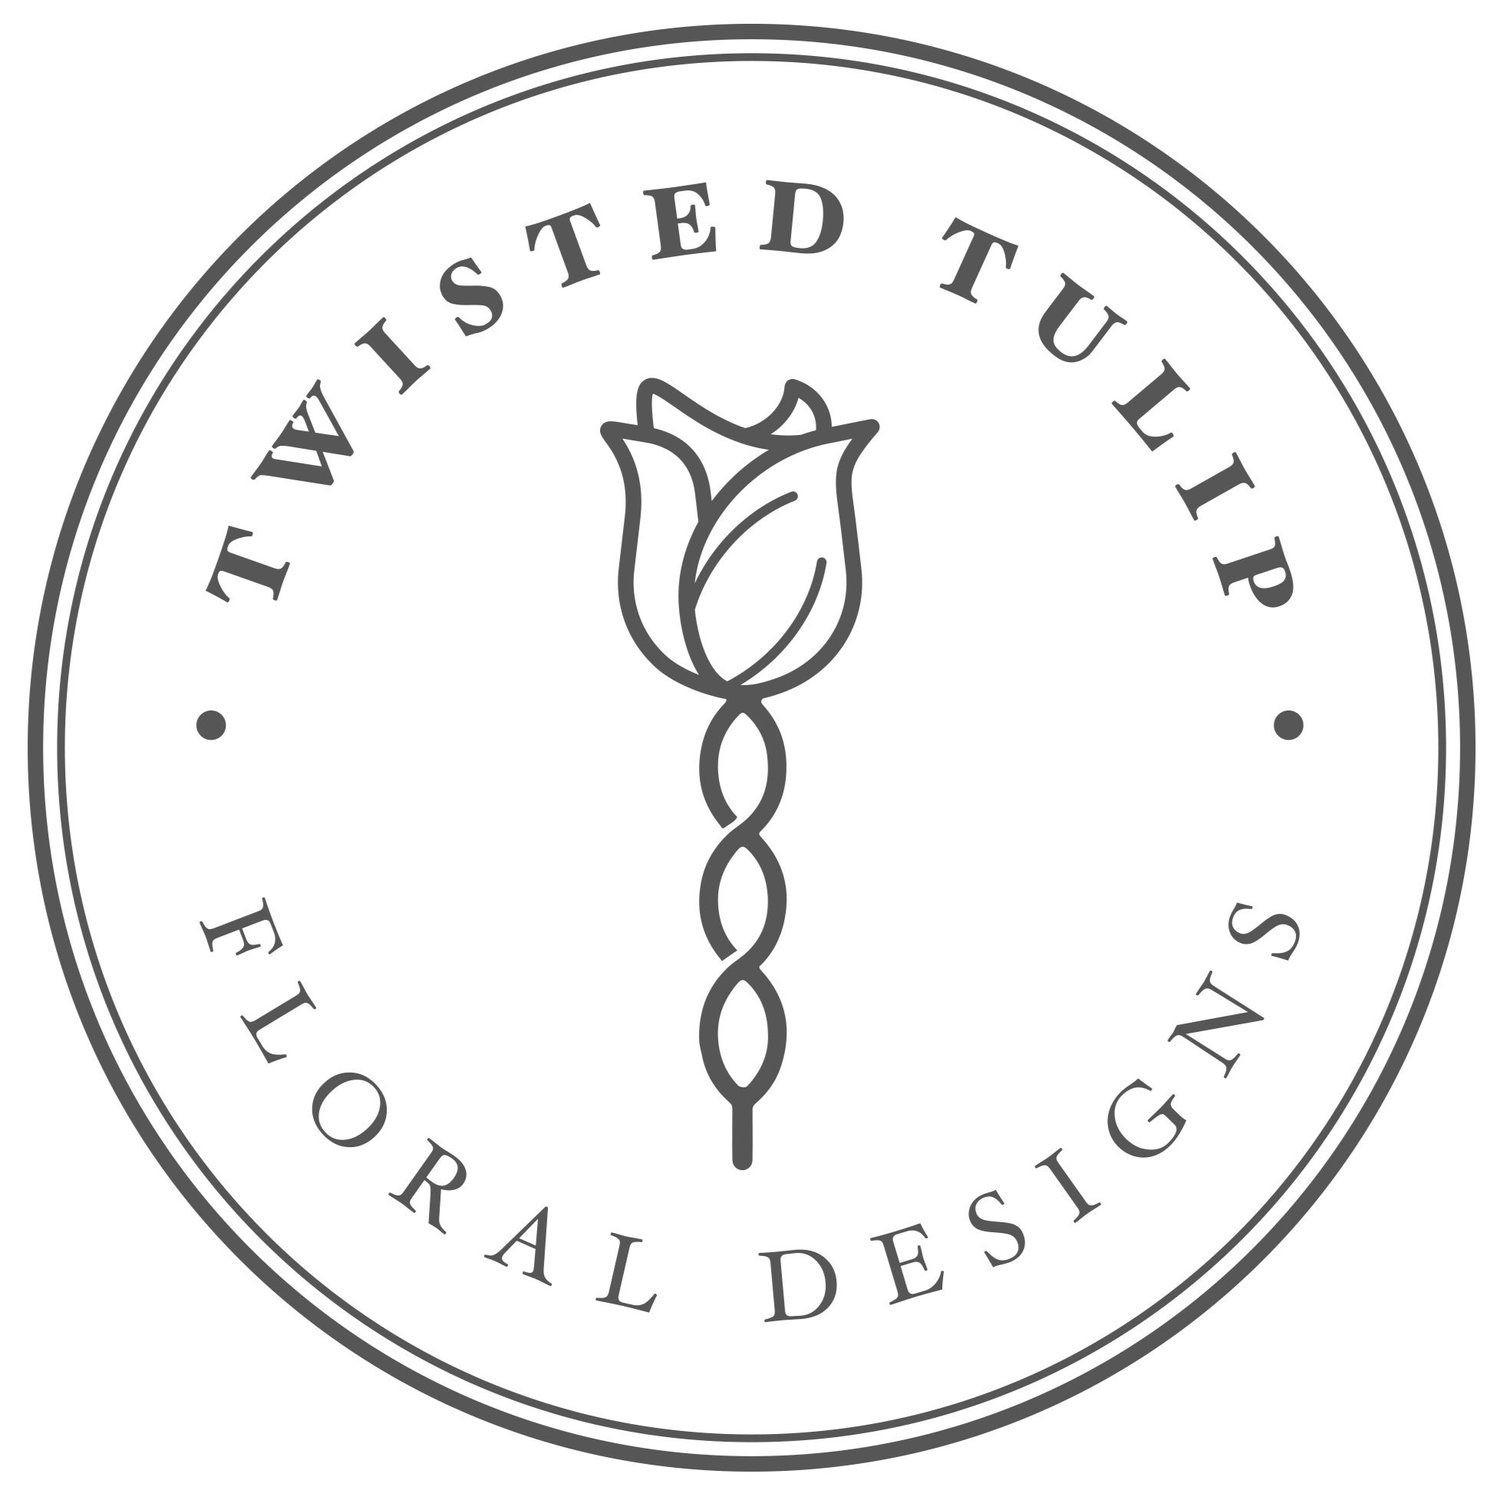 Twisted Tulip Design Wedding and event design